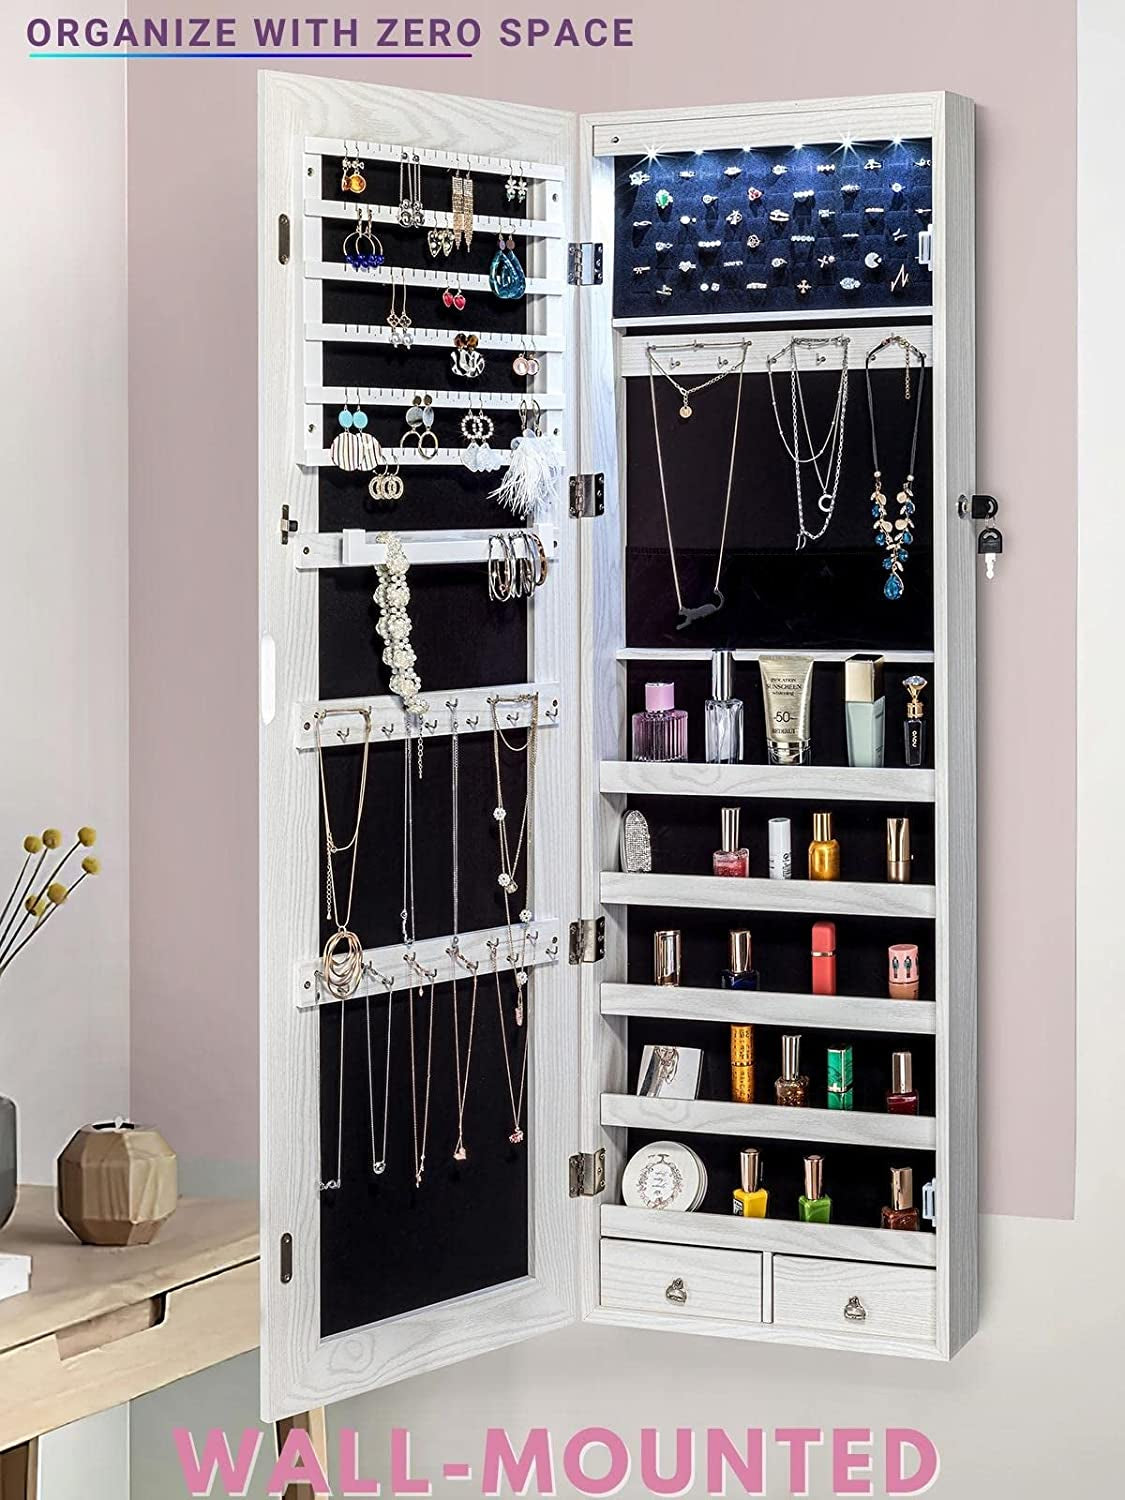 YOKUKINA Jewelry Mirror Cabinet, Large Storage Organizer W/ LED Light, Door-Hanging/ Wall-Mounted Lockable Armoire (Ivory)